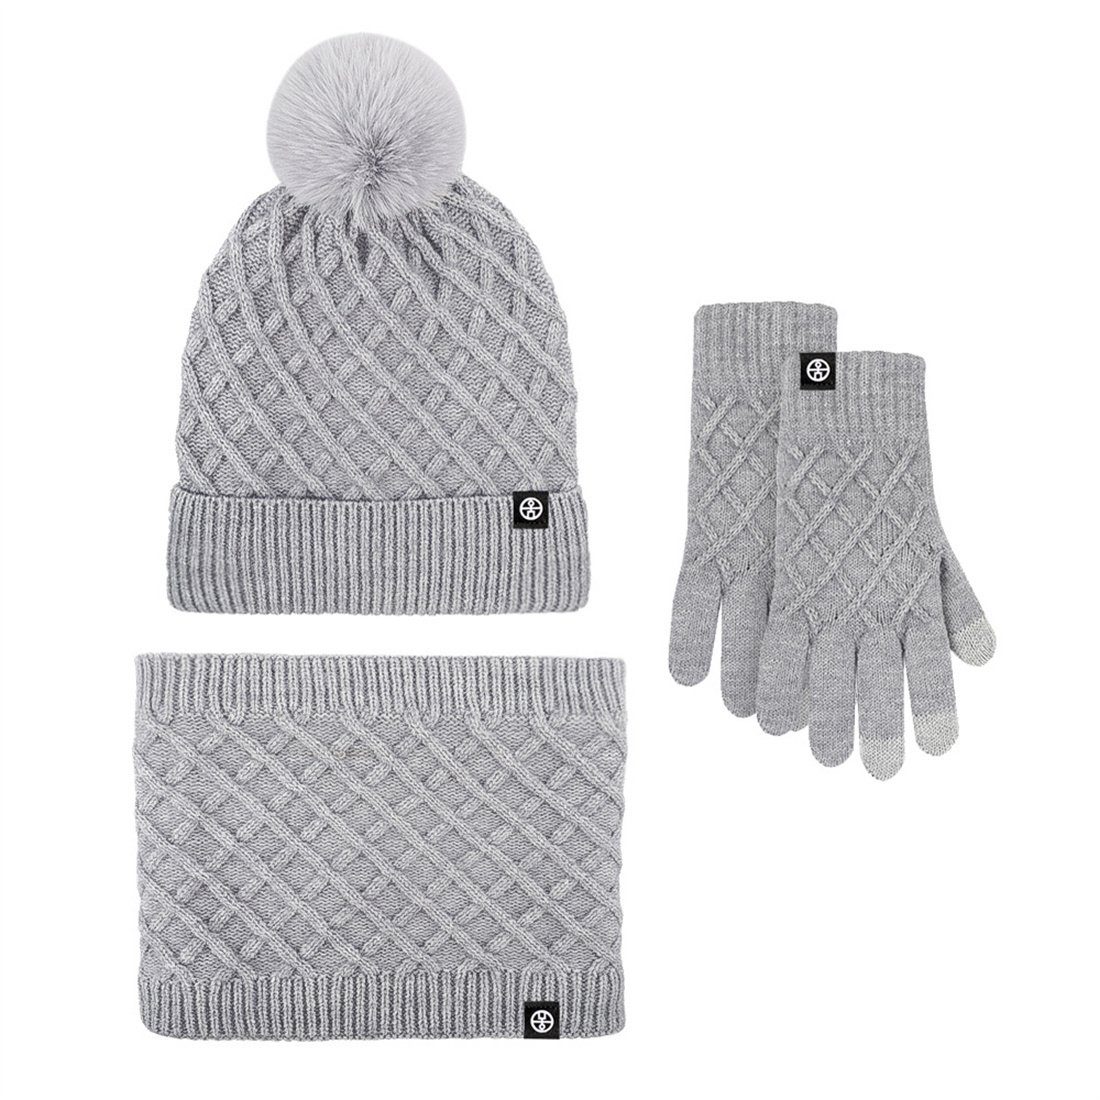 DÖRÖY Strickmütze Winter gepolstert Warm Mütze Schal Handschuhe 3 Stück, Warm Set Grau | Strickmützen